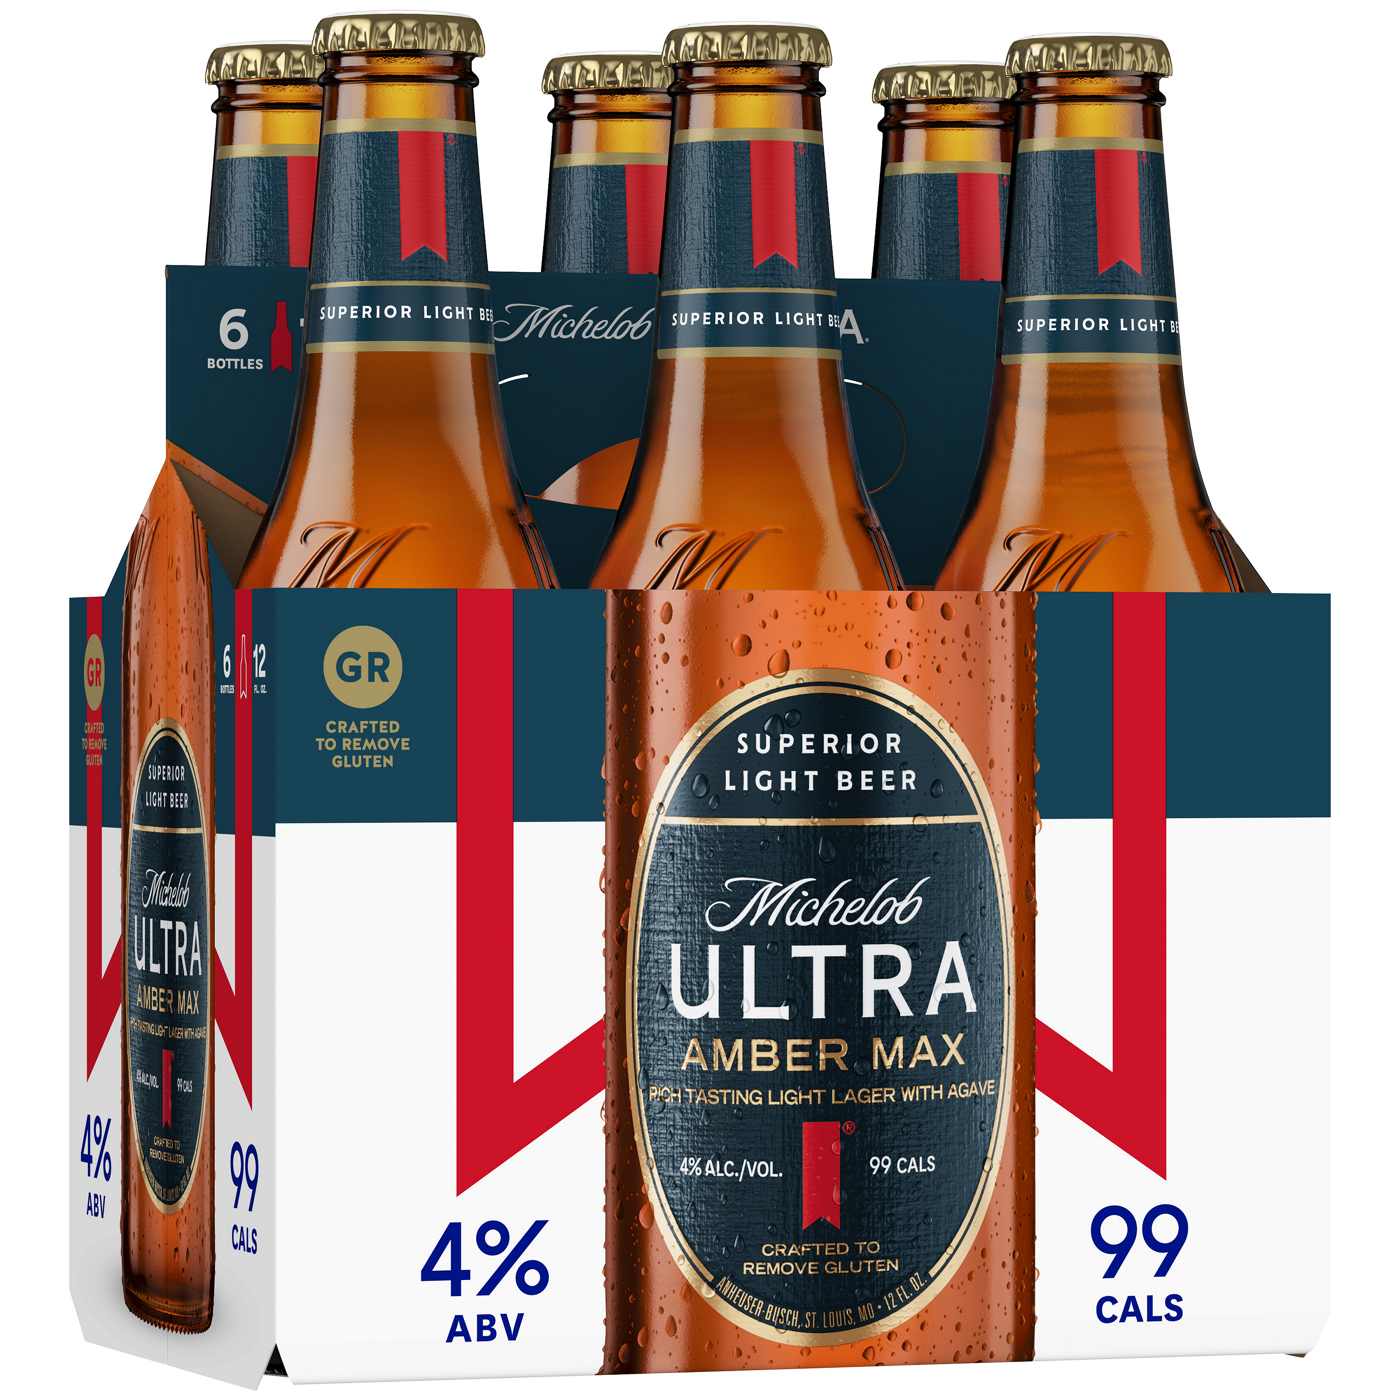 Michelob Ultra Amber Max Light Lager Beer 6 pk Bottles; image 1 of 2